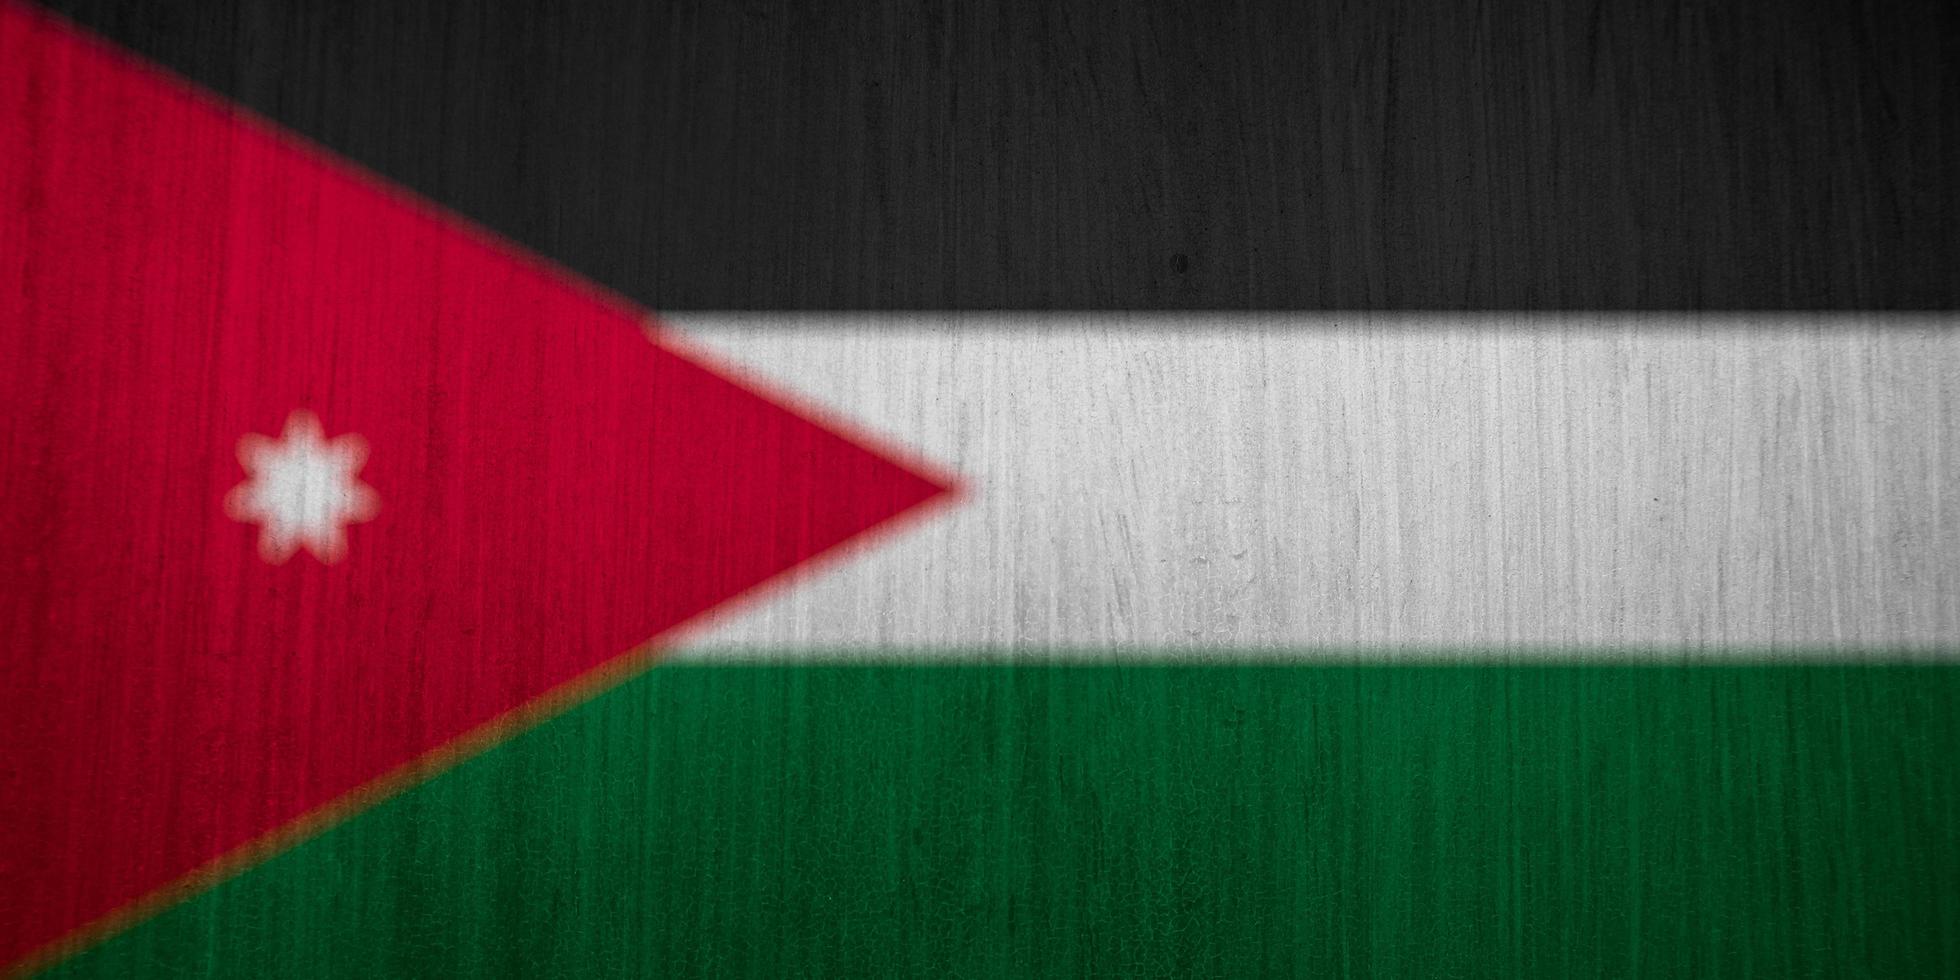 jordan flag texture as a background photo